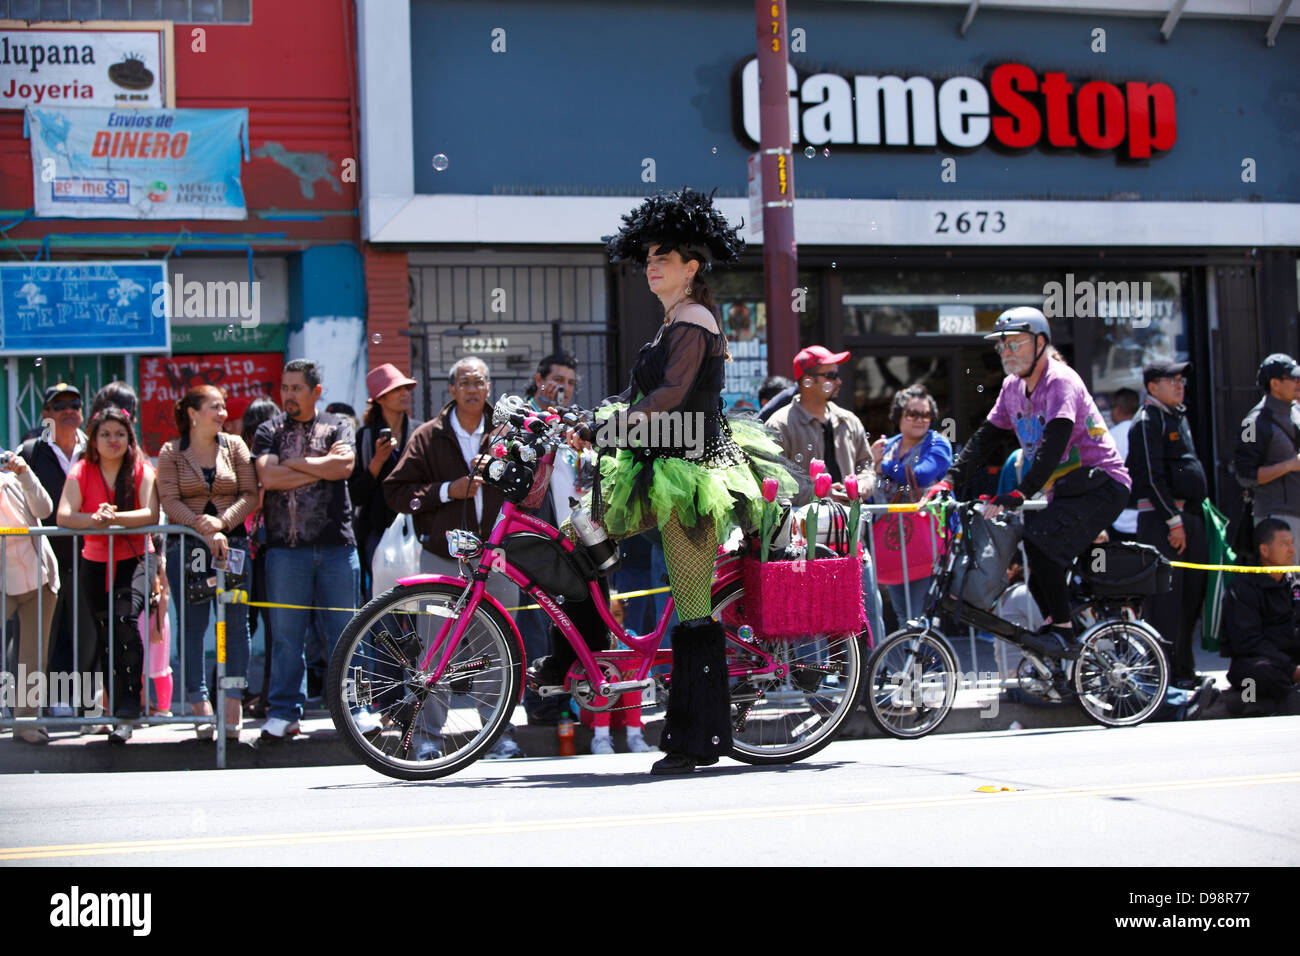 Colorful portrait of Carnaval participant, Mission District, San Francisco, California, USA Stock Photo